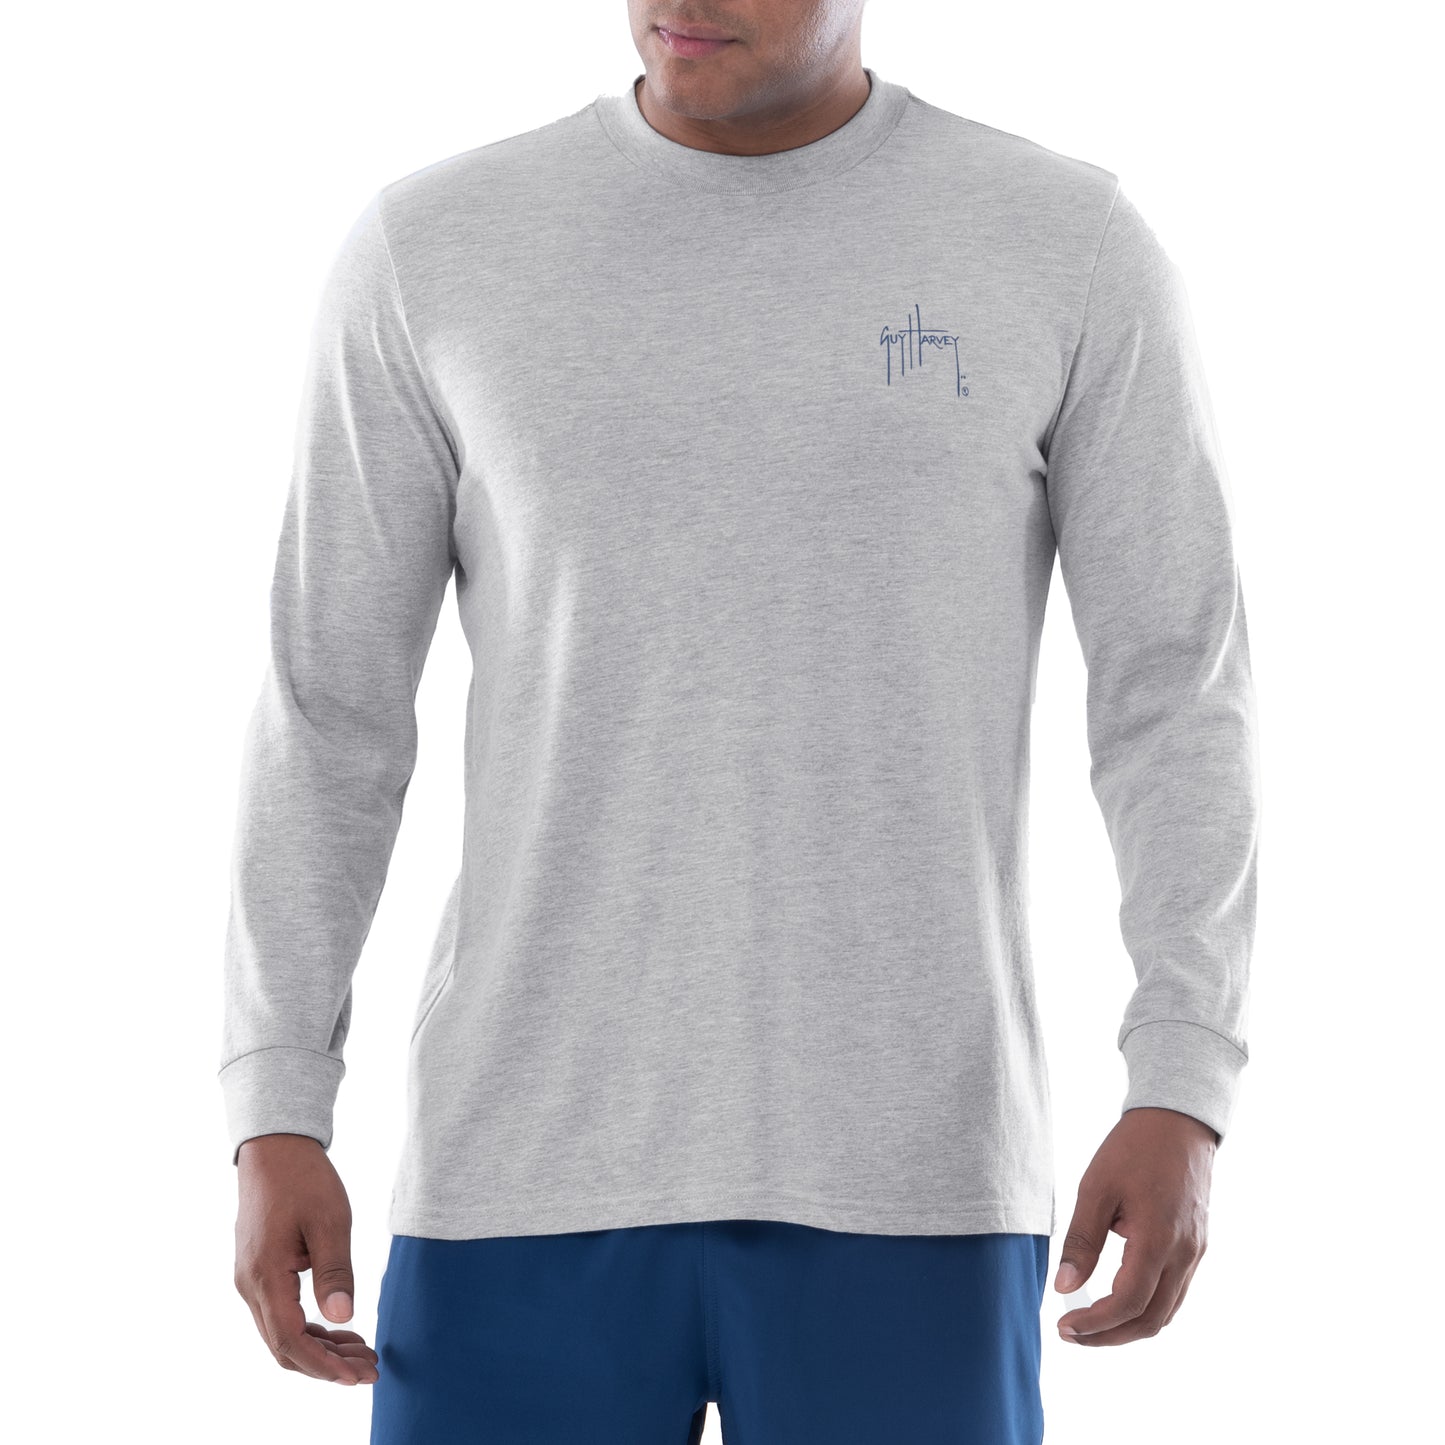 Men's Marlin Boat Long Sleeve T-Shirt